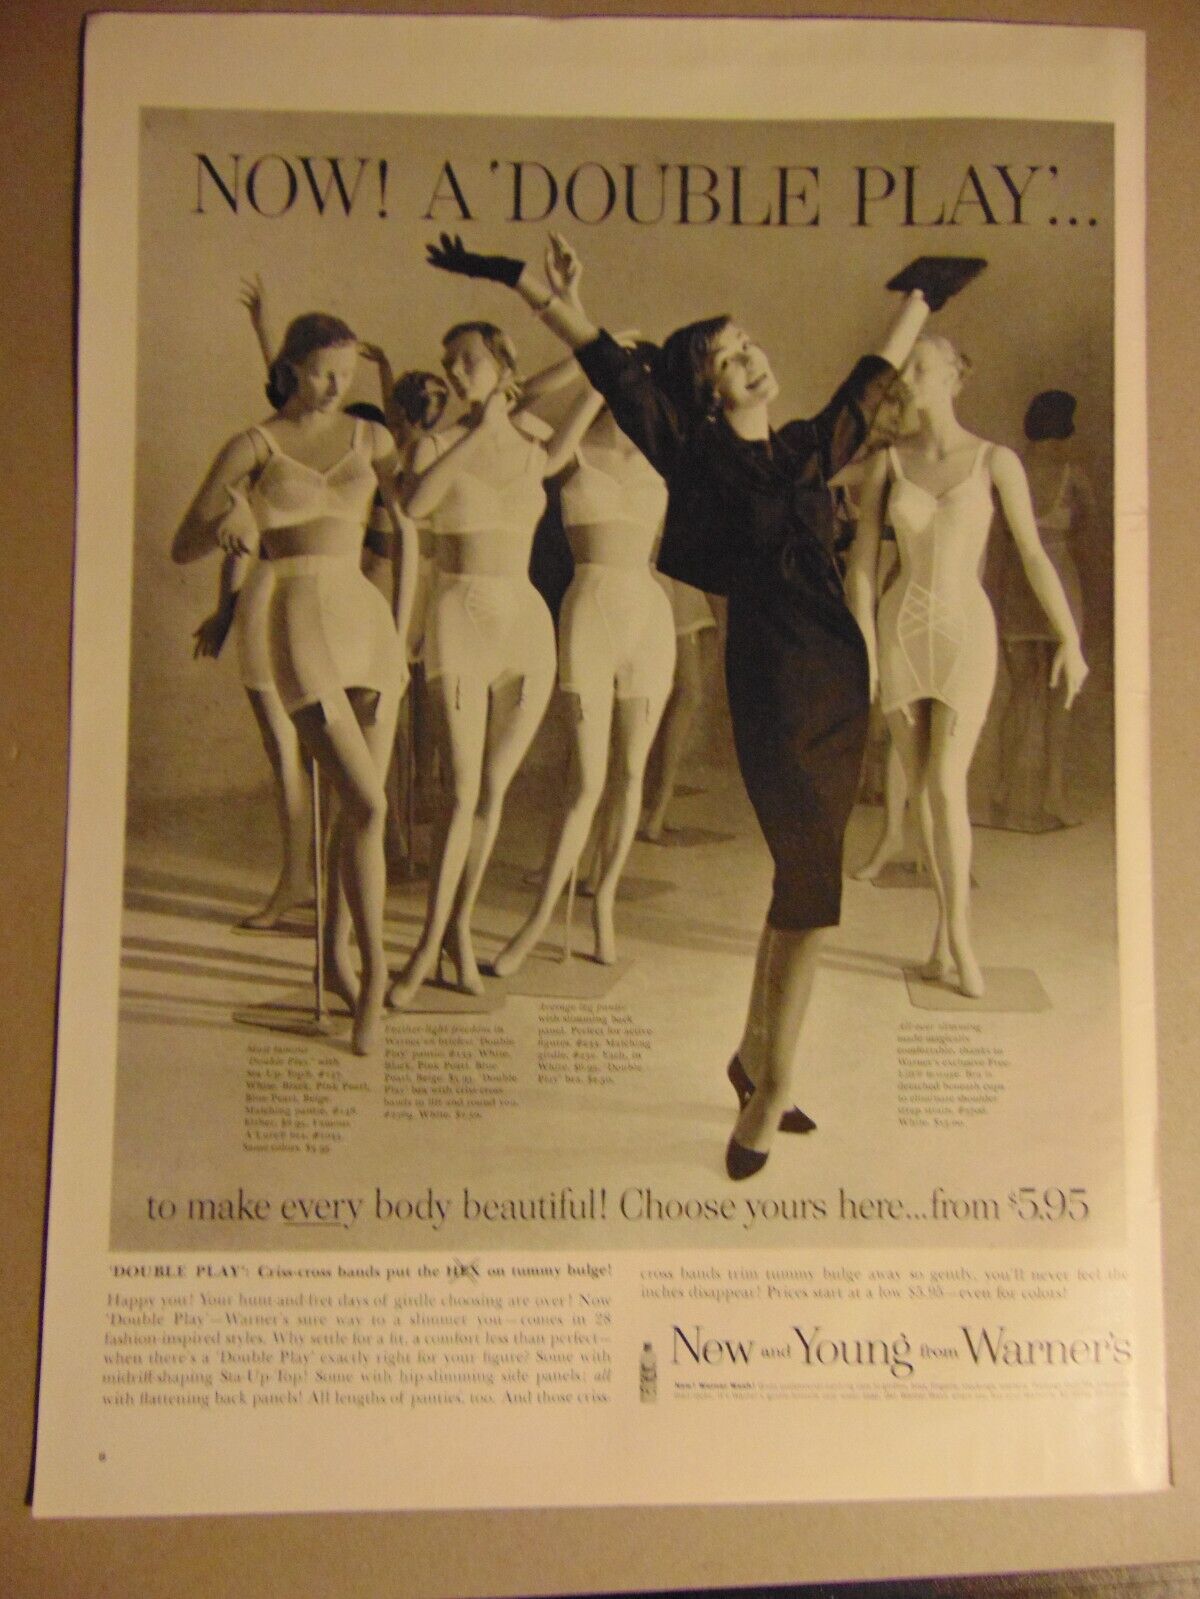 1960 Warner\'s Double Play Women\'s Under garments vintage print ad